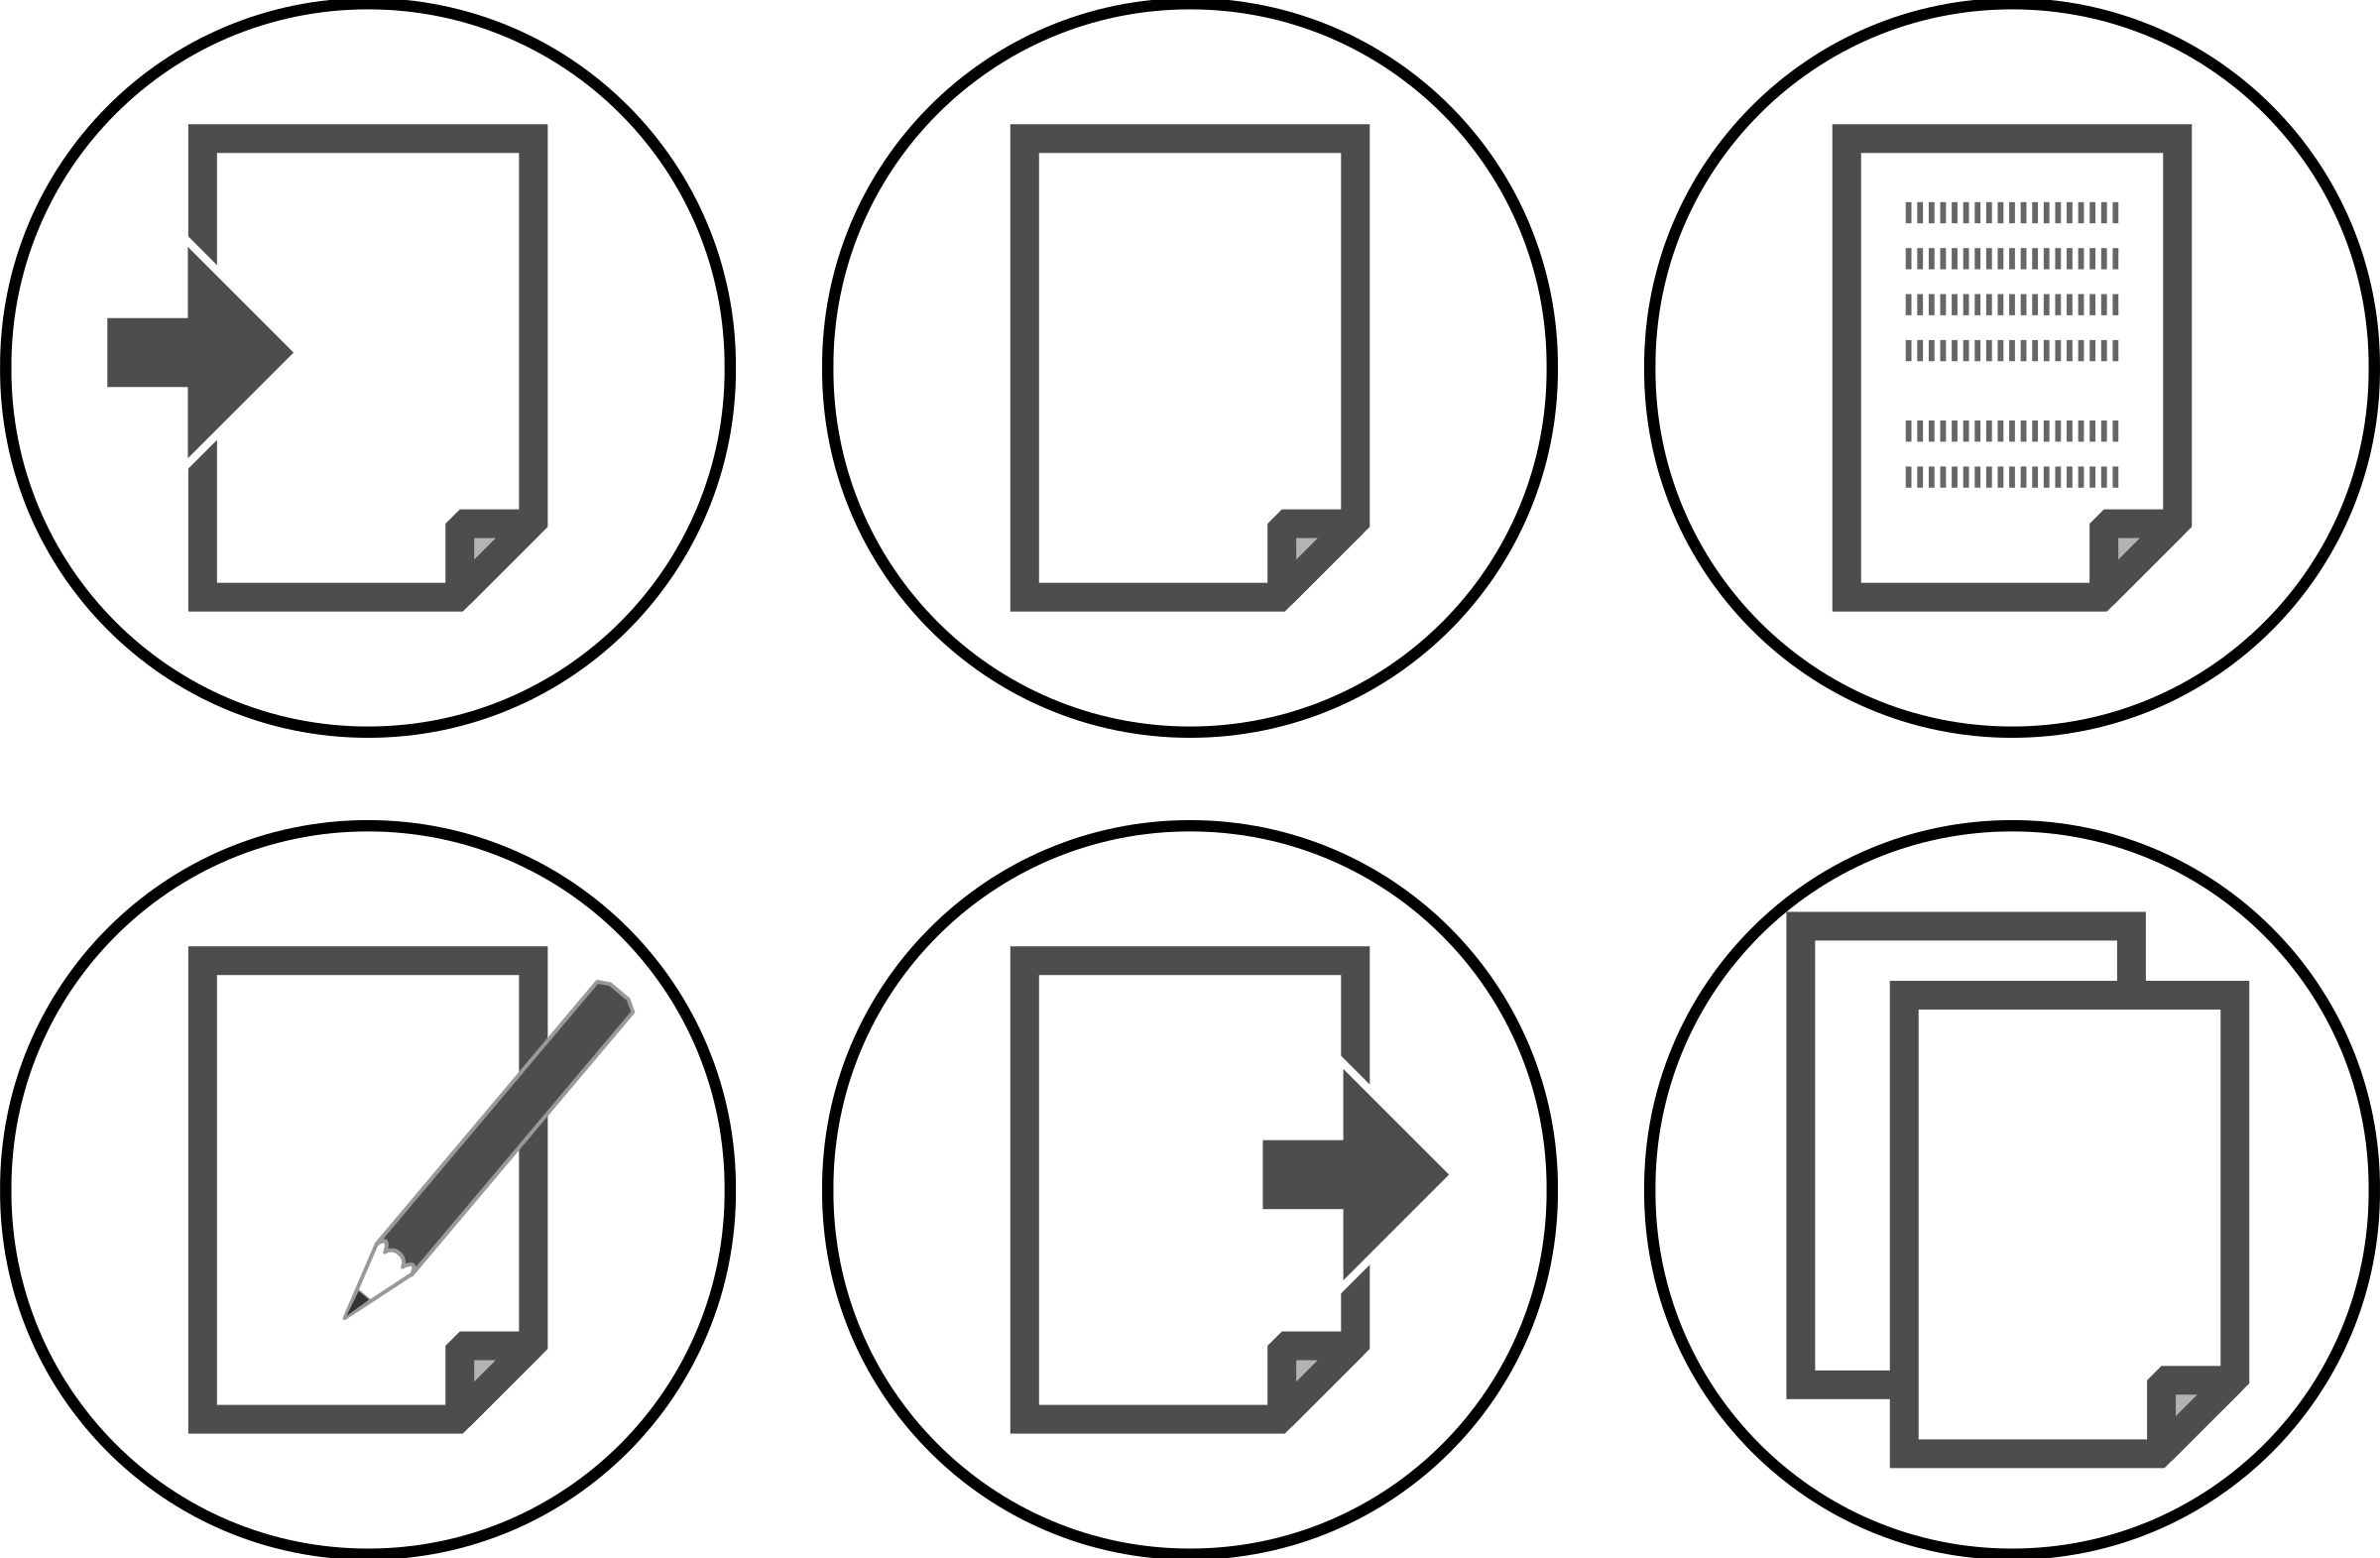 document clipart manilla folder